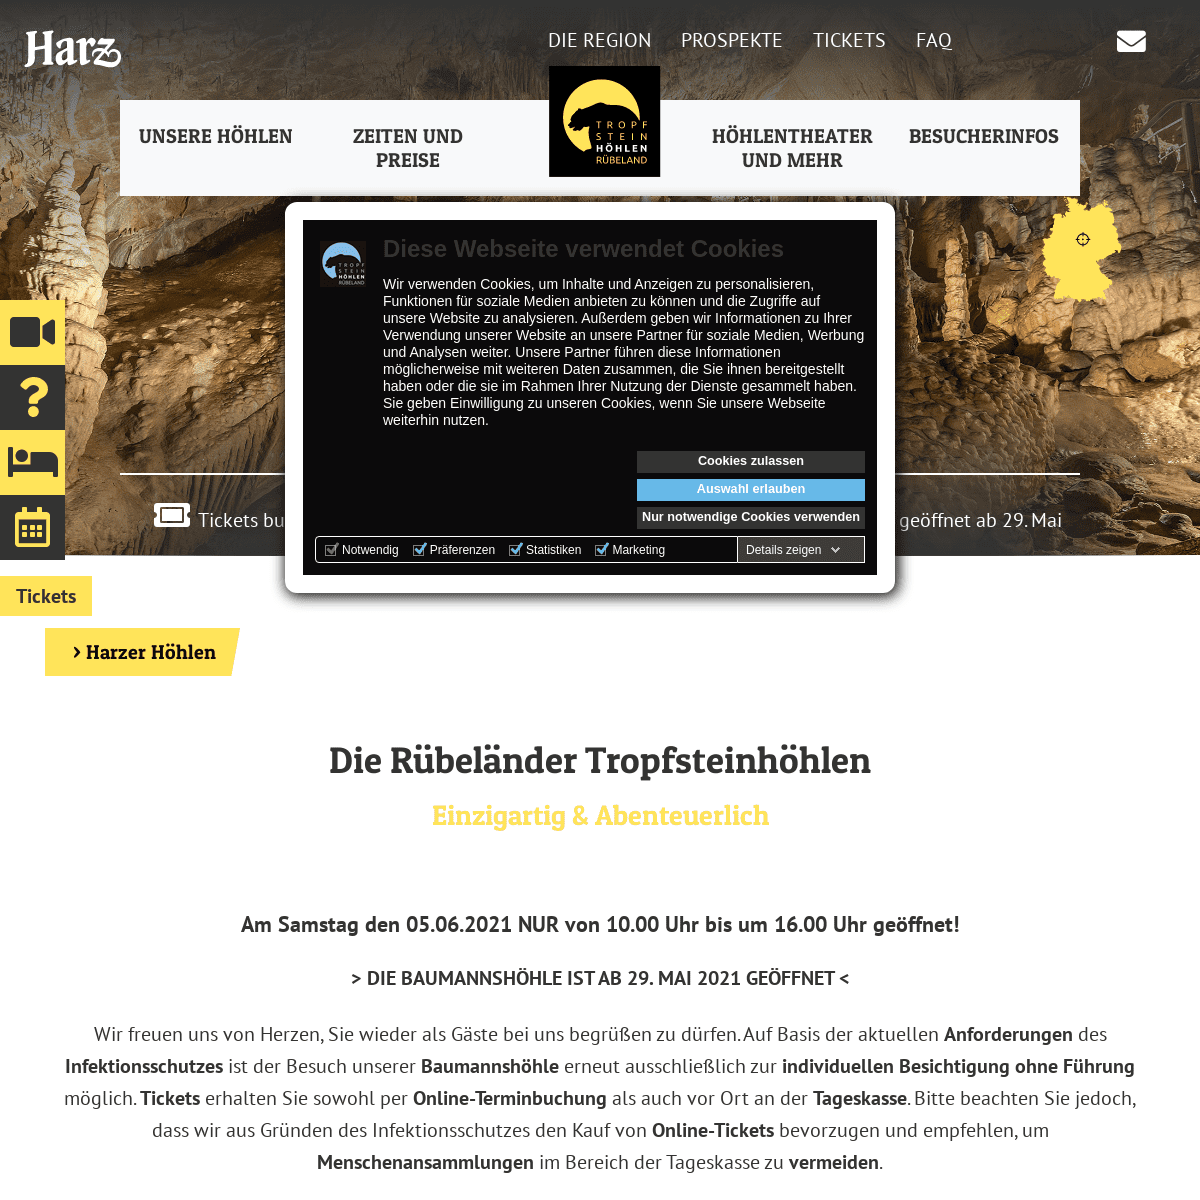 A complete backup of https://harzer-hoehlen.de